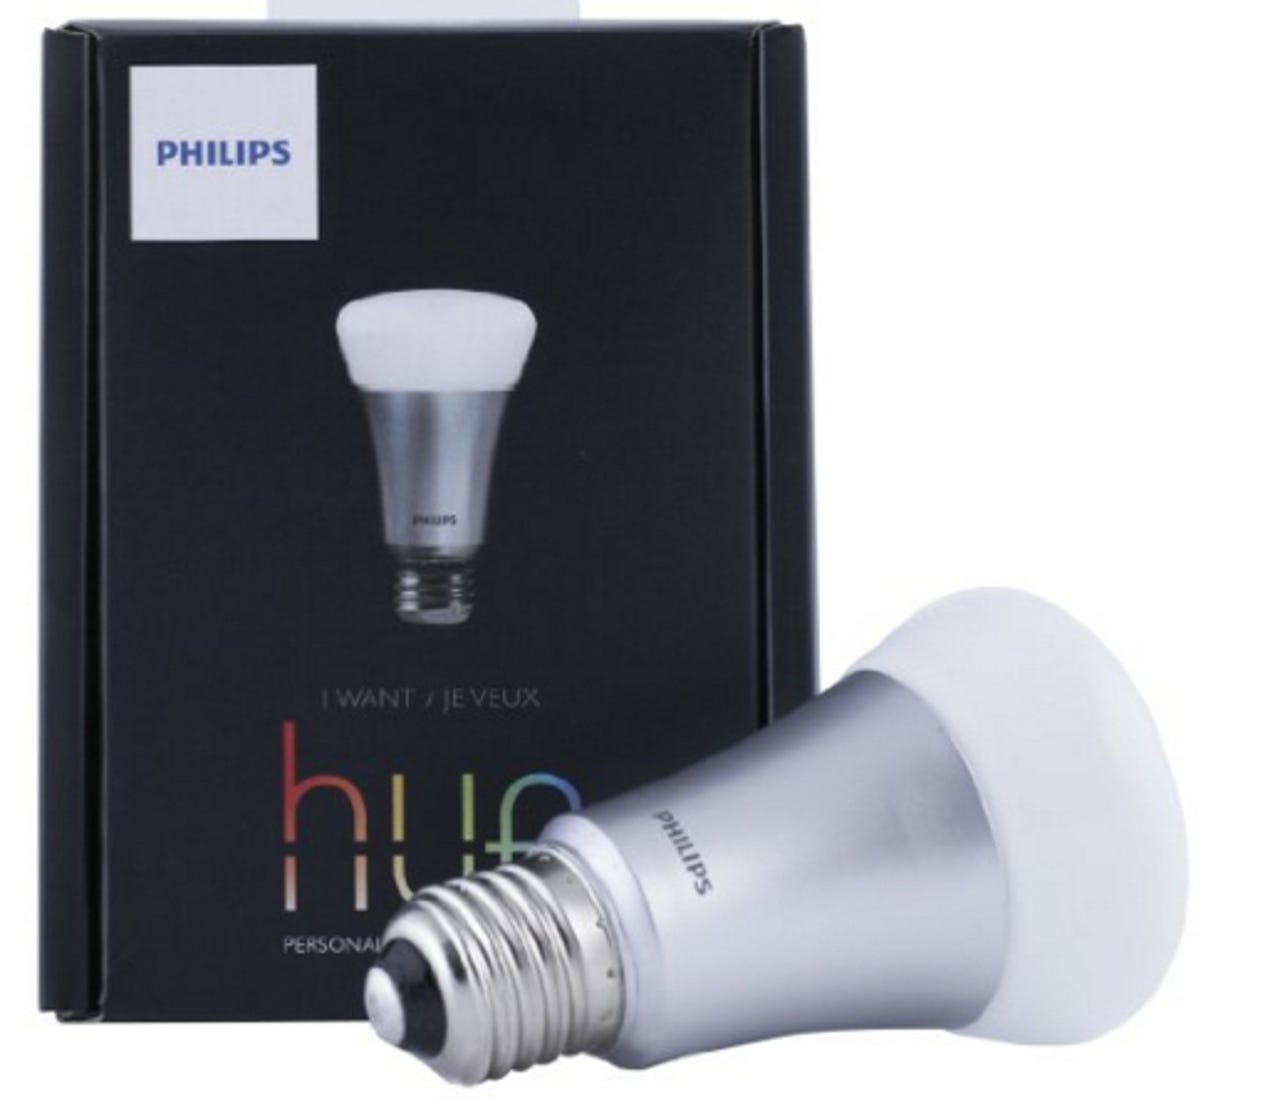 philips-426361-hue-personal-wireless-lighting-single-bulb-retail-led-household-light-bulbs-amazon-com-2015-12-13-16-08-29.jpg